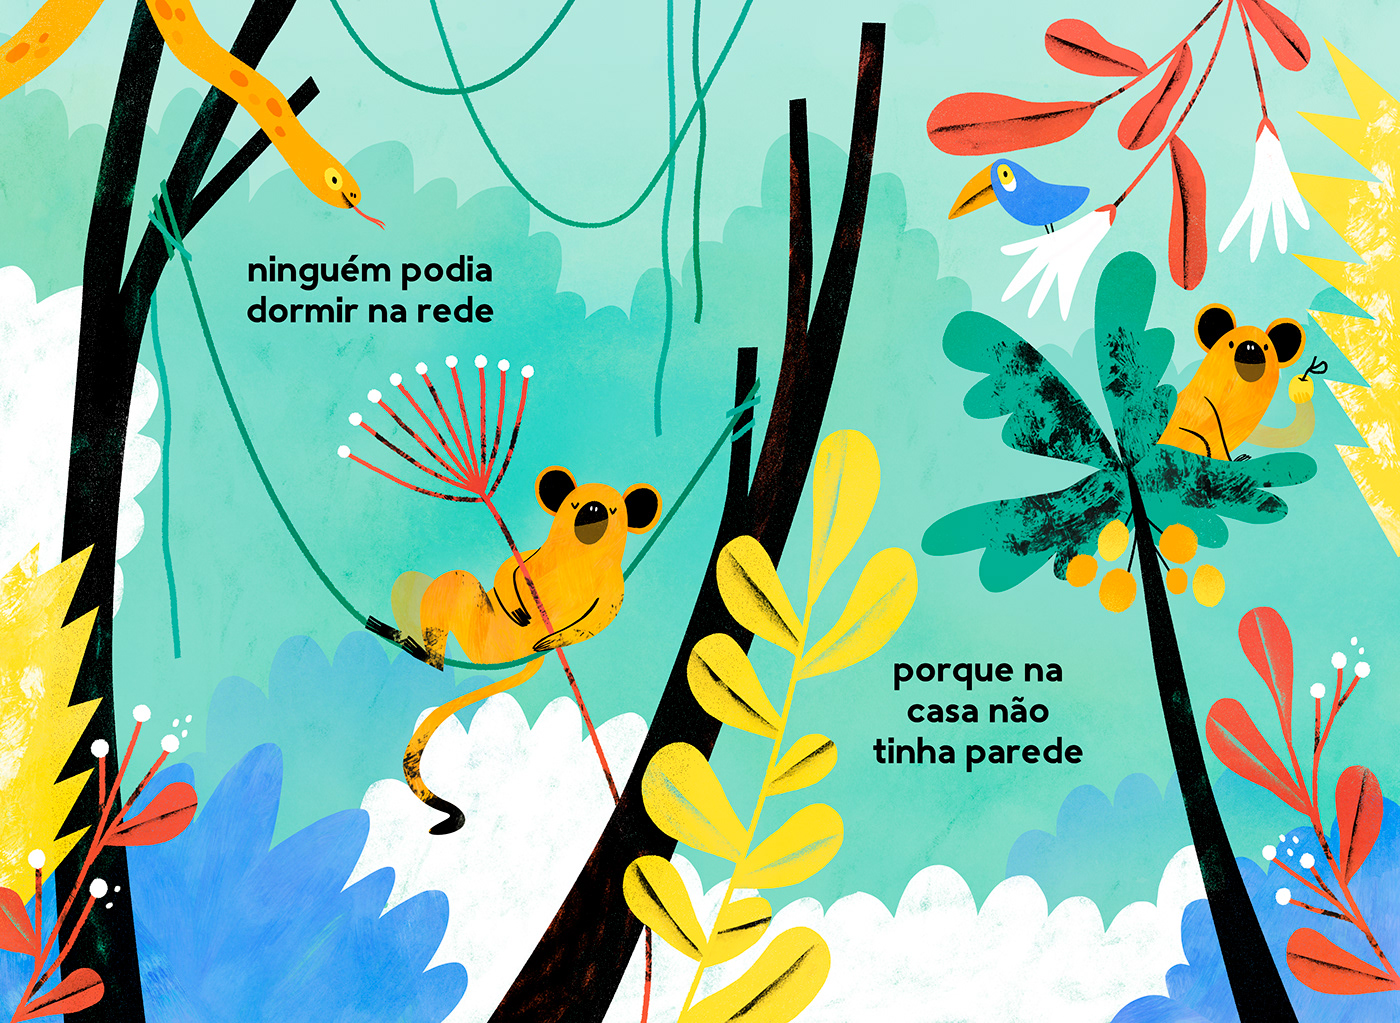 Brazilian casa Dinossaur jungle planet poem song vinicius de moraes